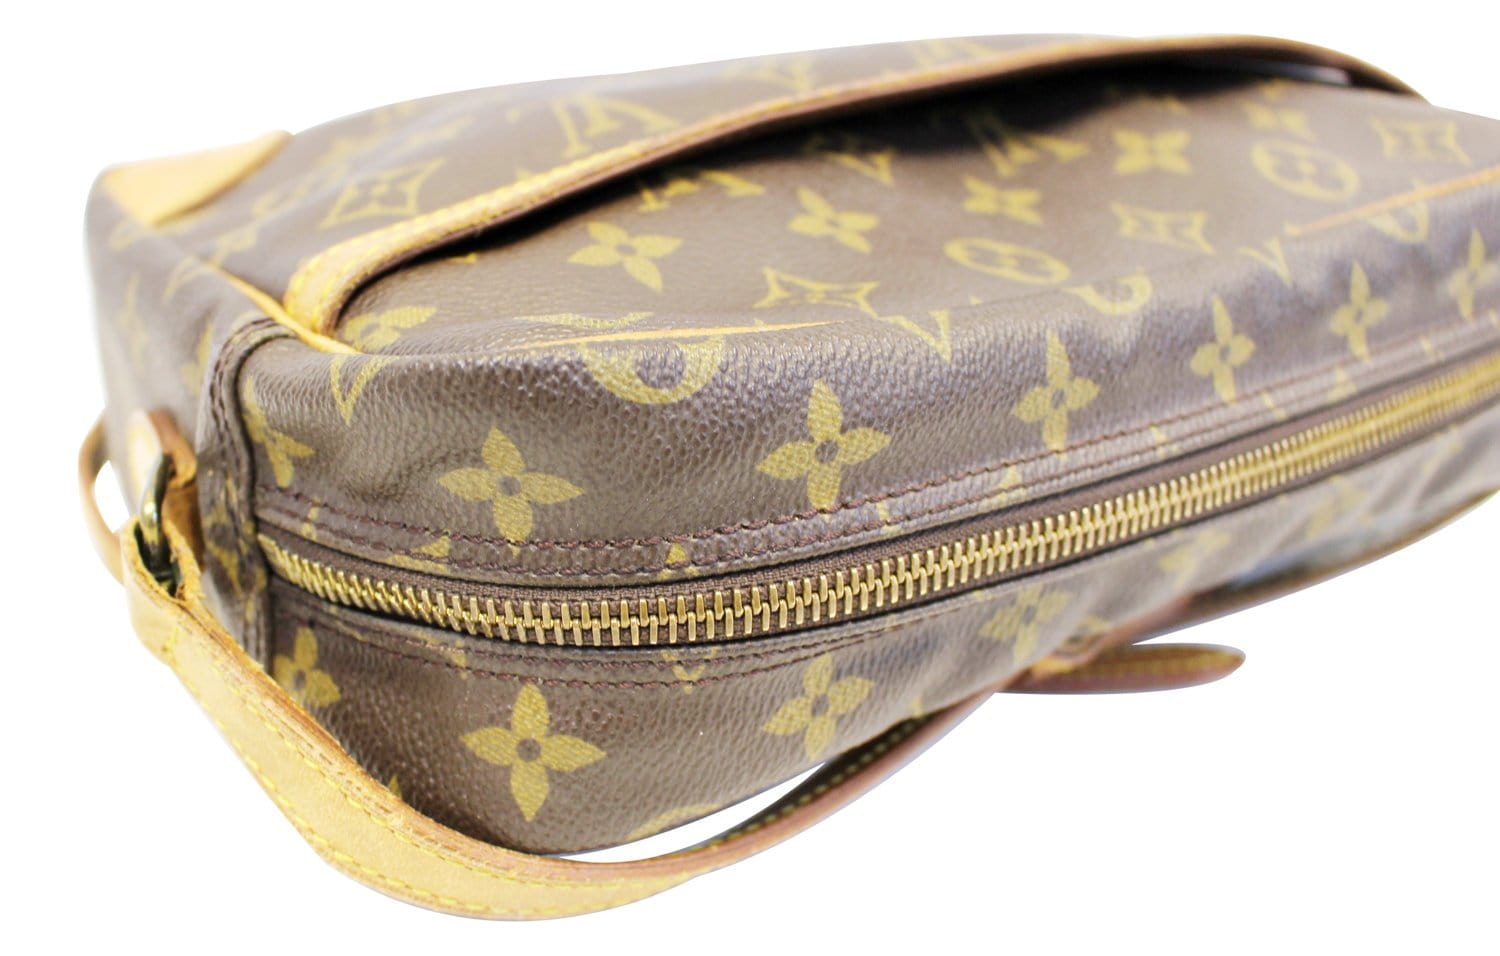 Louis Vuitton Trocadero 30 Shoulder Bag